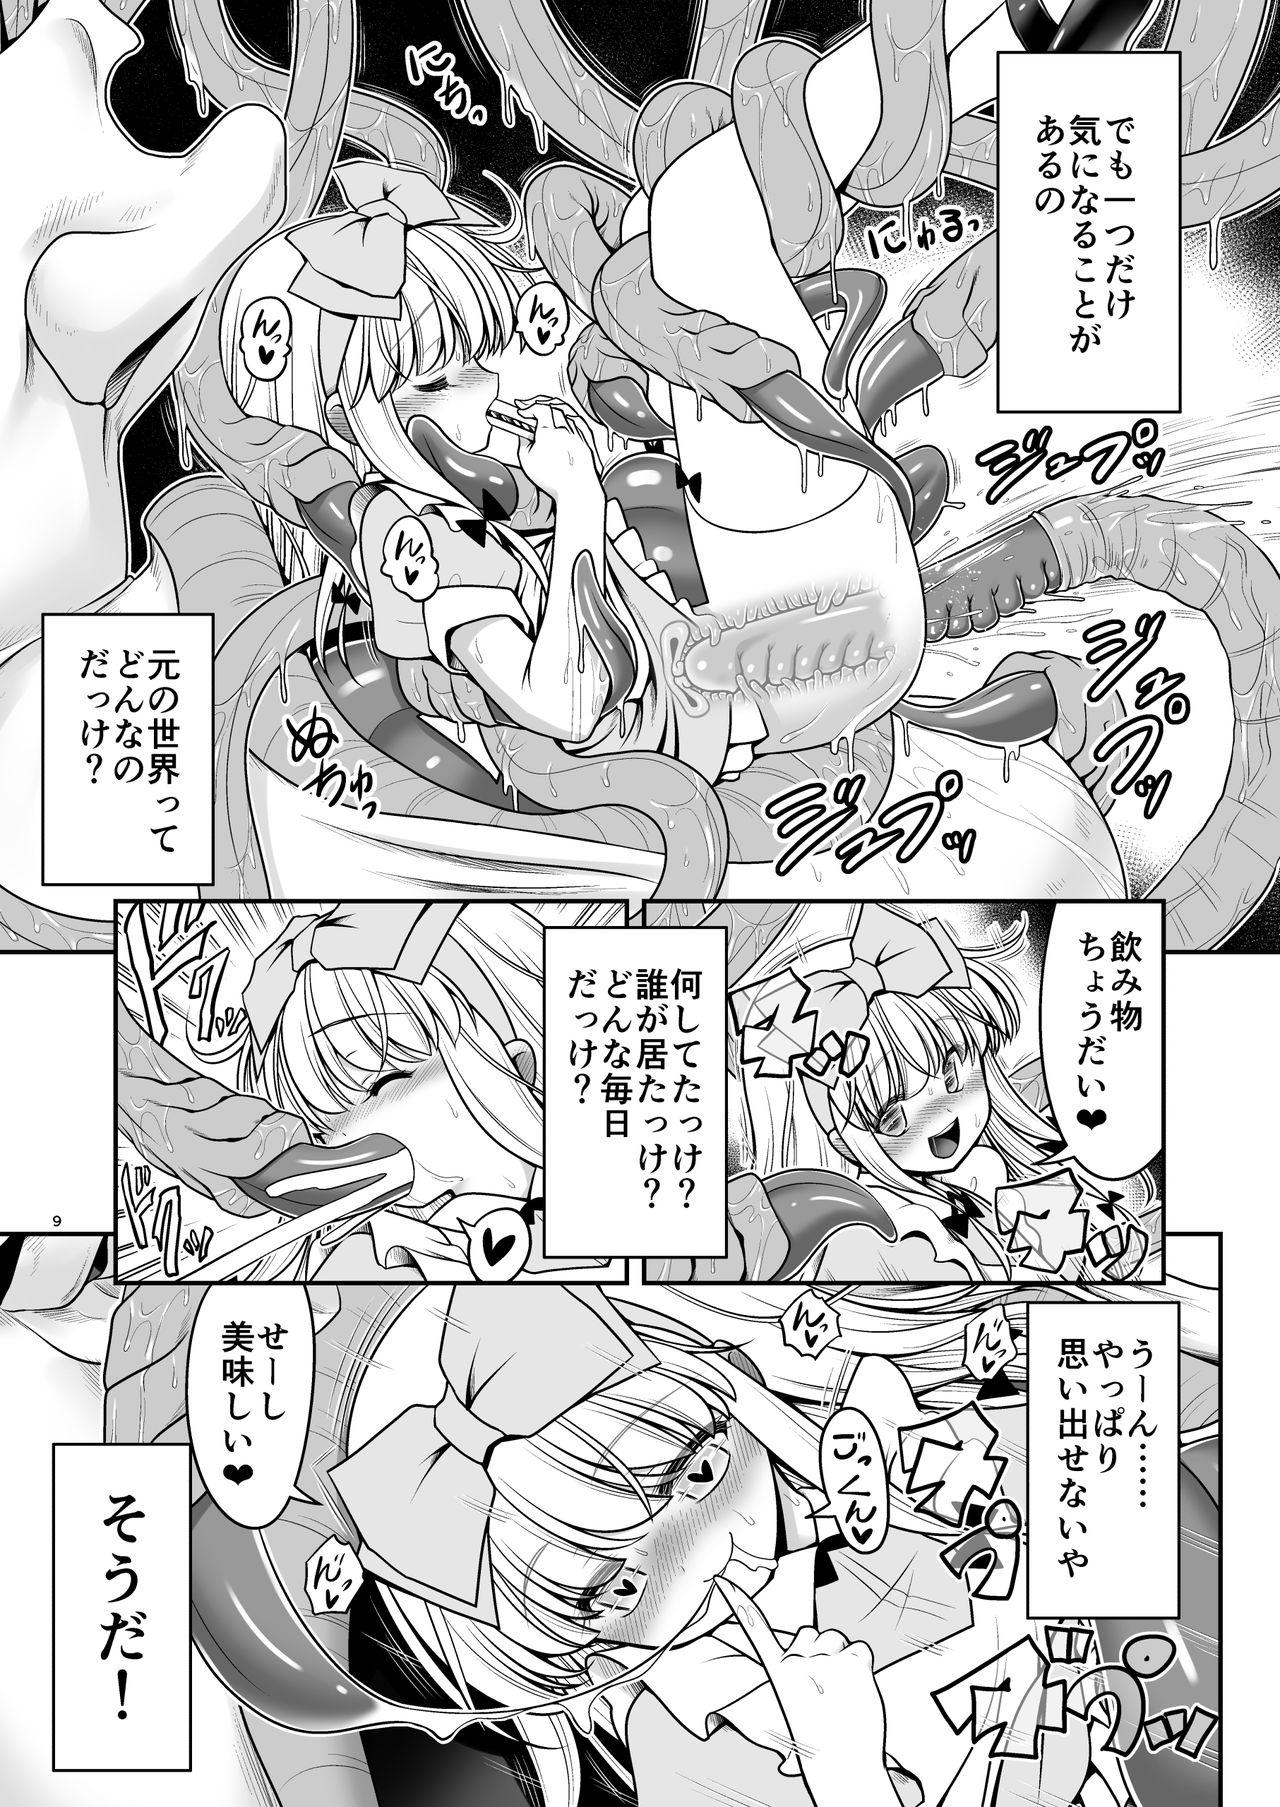 Friend Ishukan No Kuni No Alice - Alice in wonderland Grandmother - Page 9